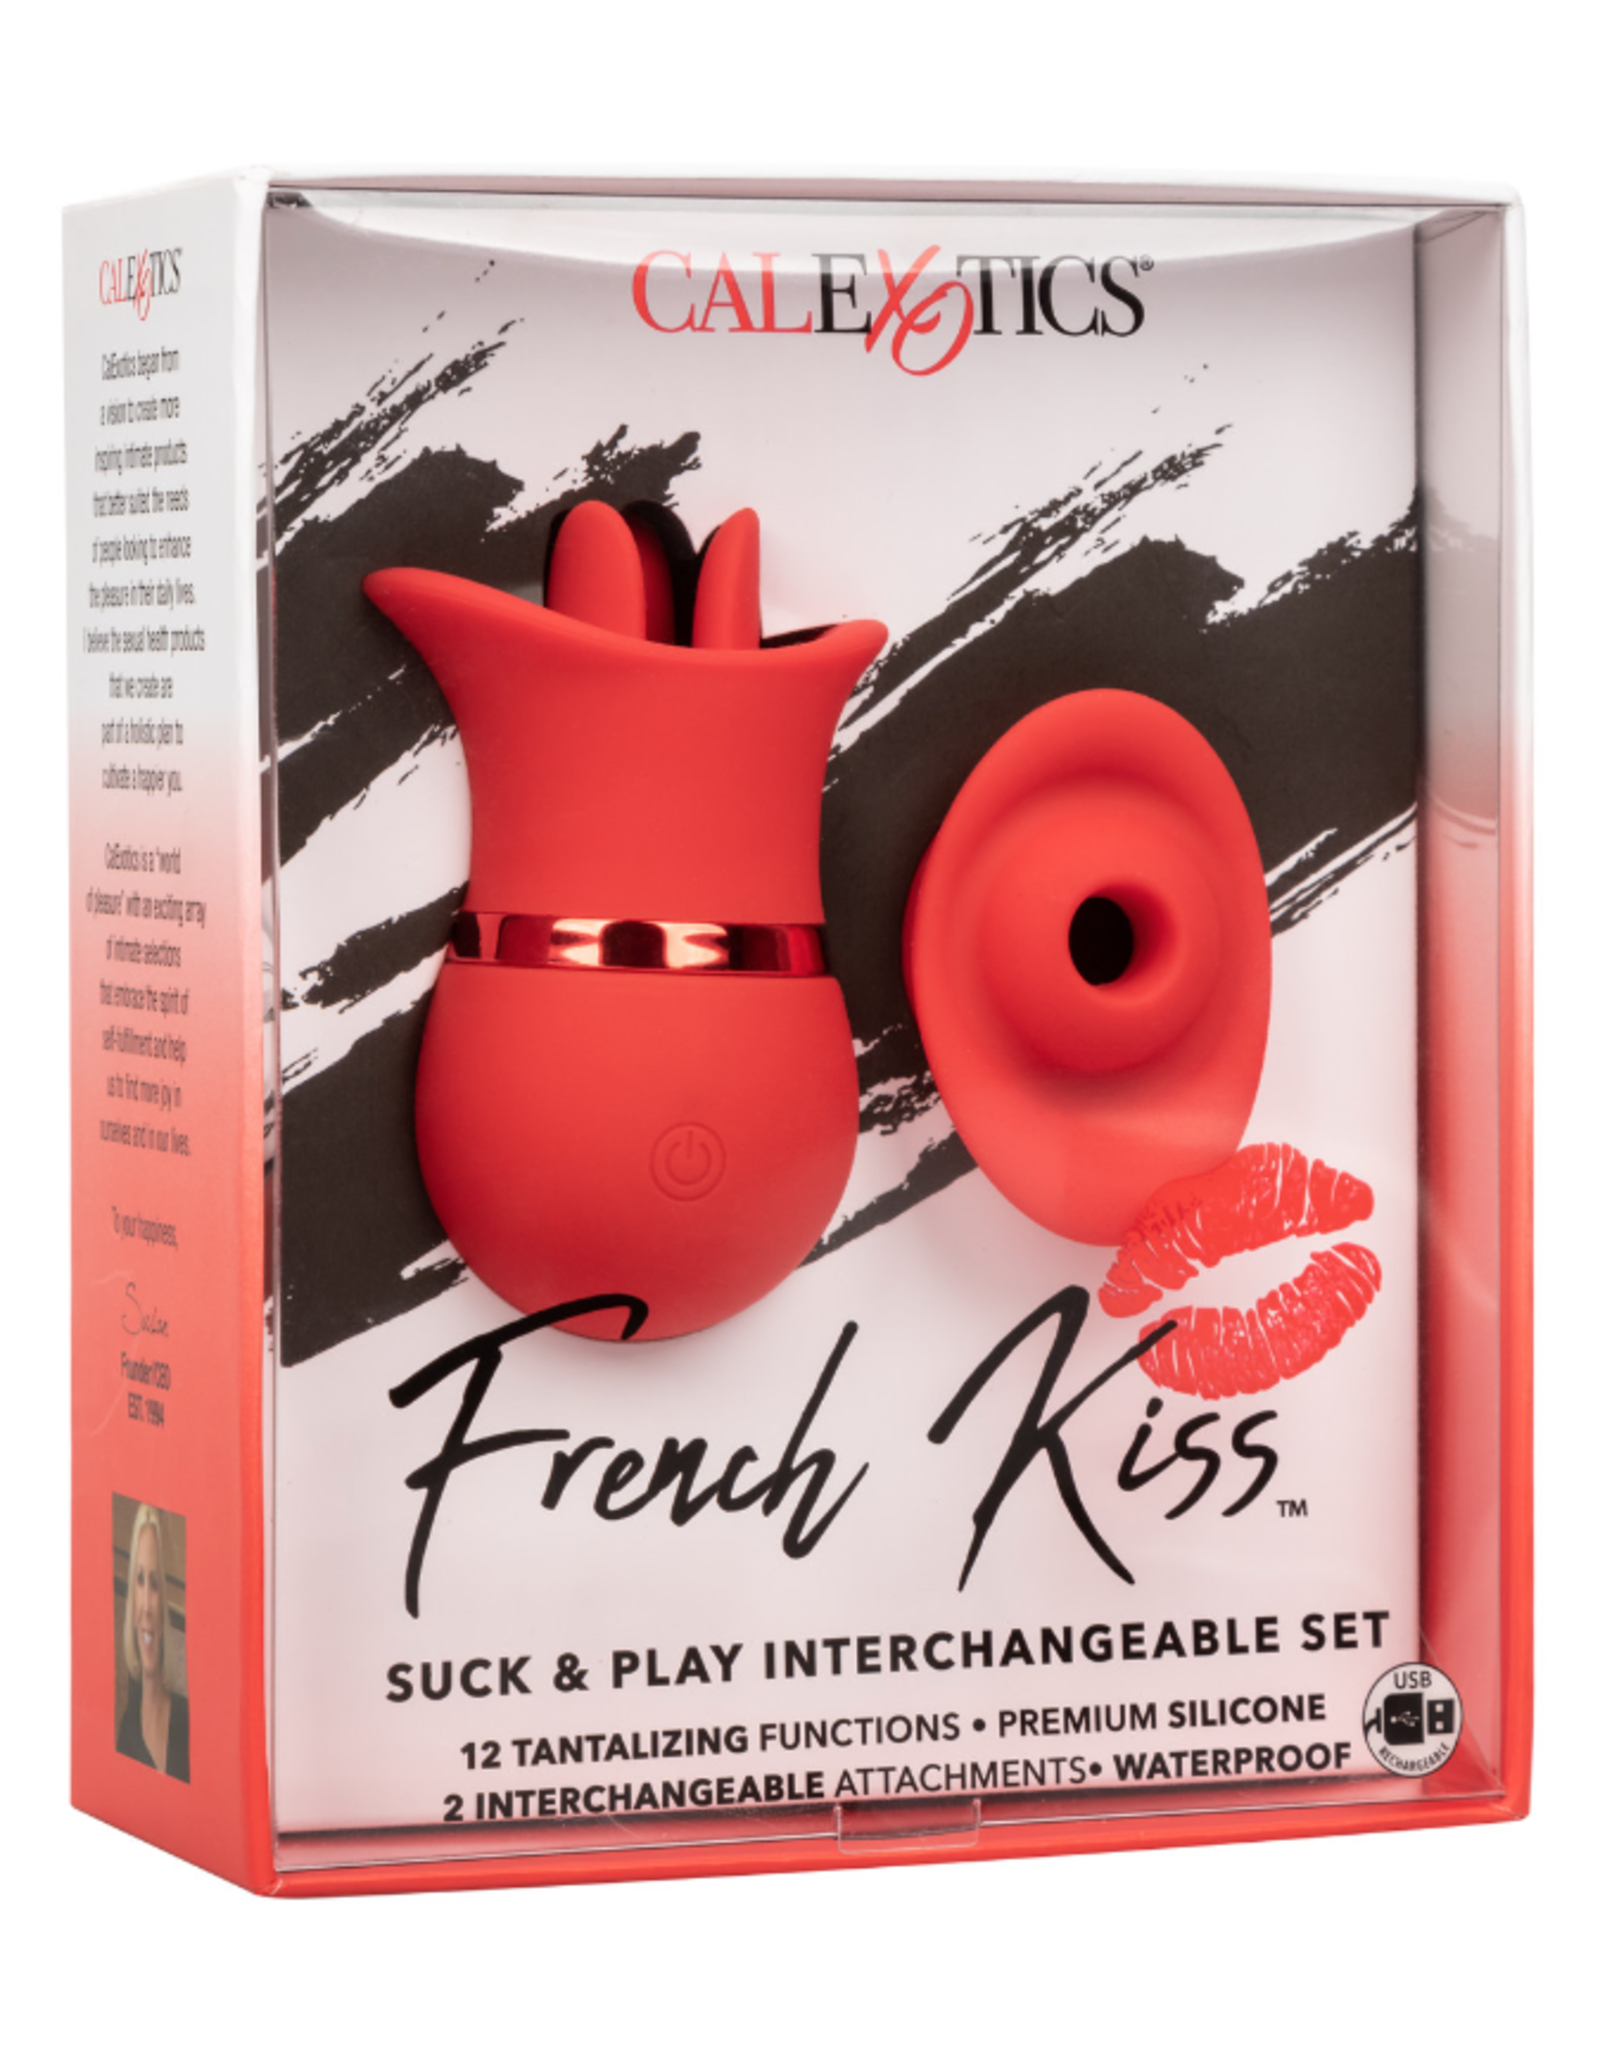 Calexotics French Kiss Suck & Play Interchangeable Set